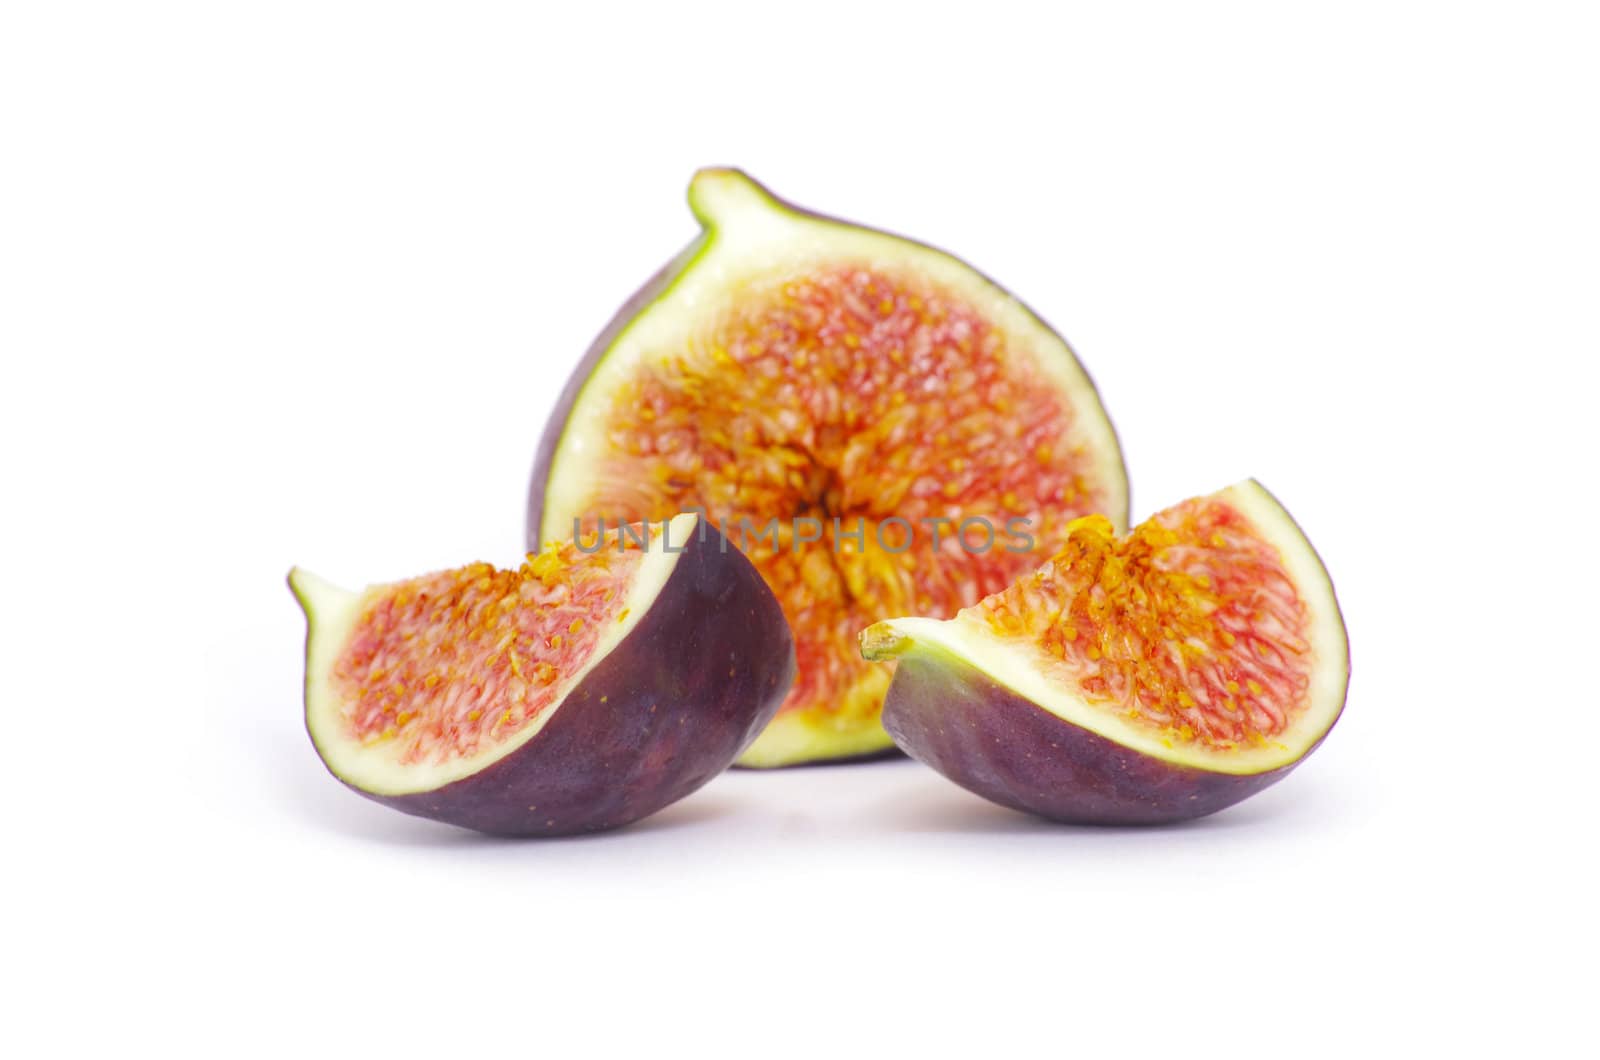 fresh figs isolated on white background